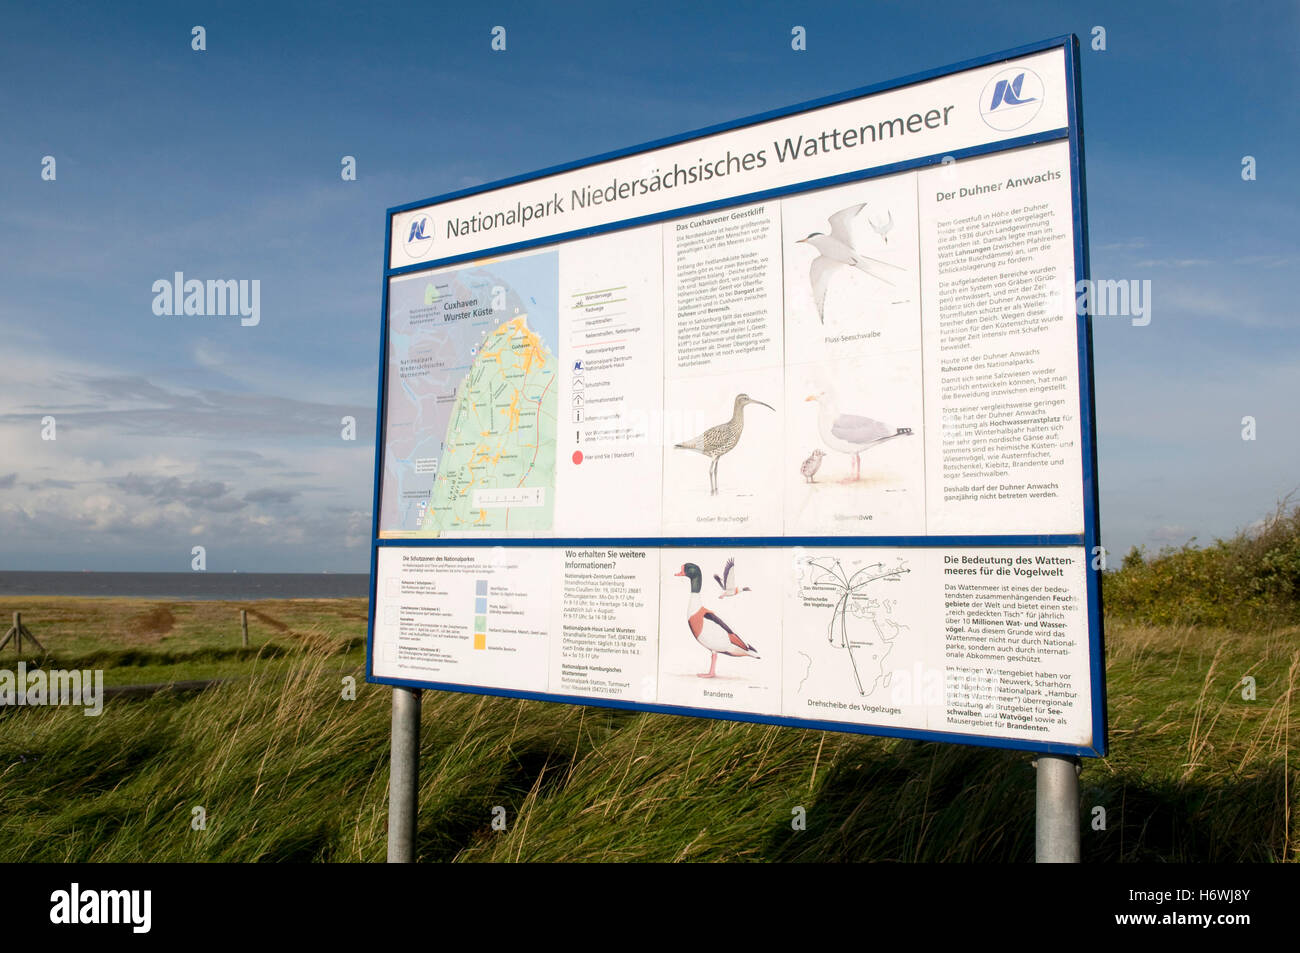 Information board in the Nationalpark Niedersaechsisches Wattenmeer, Lower Saxony Wadden Sea National Park Stock Photo